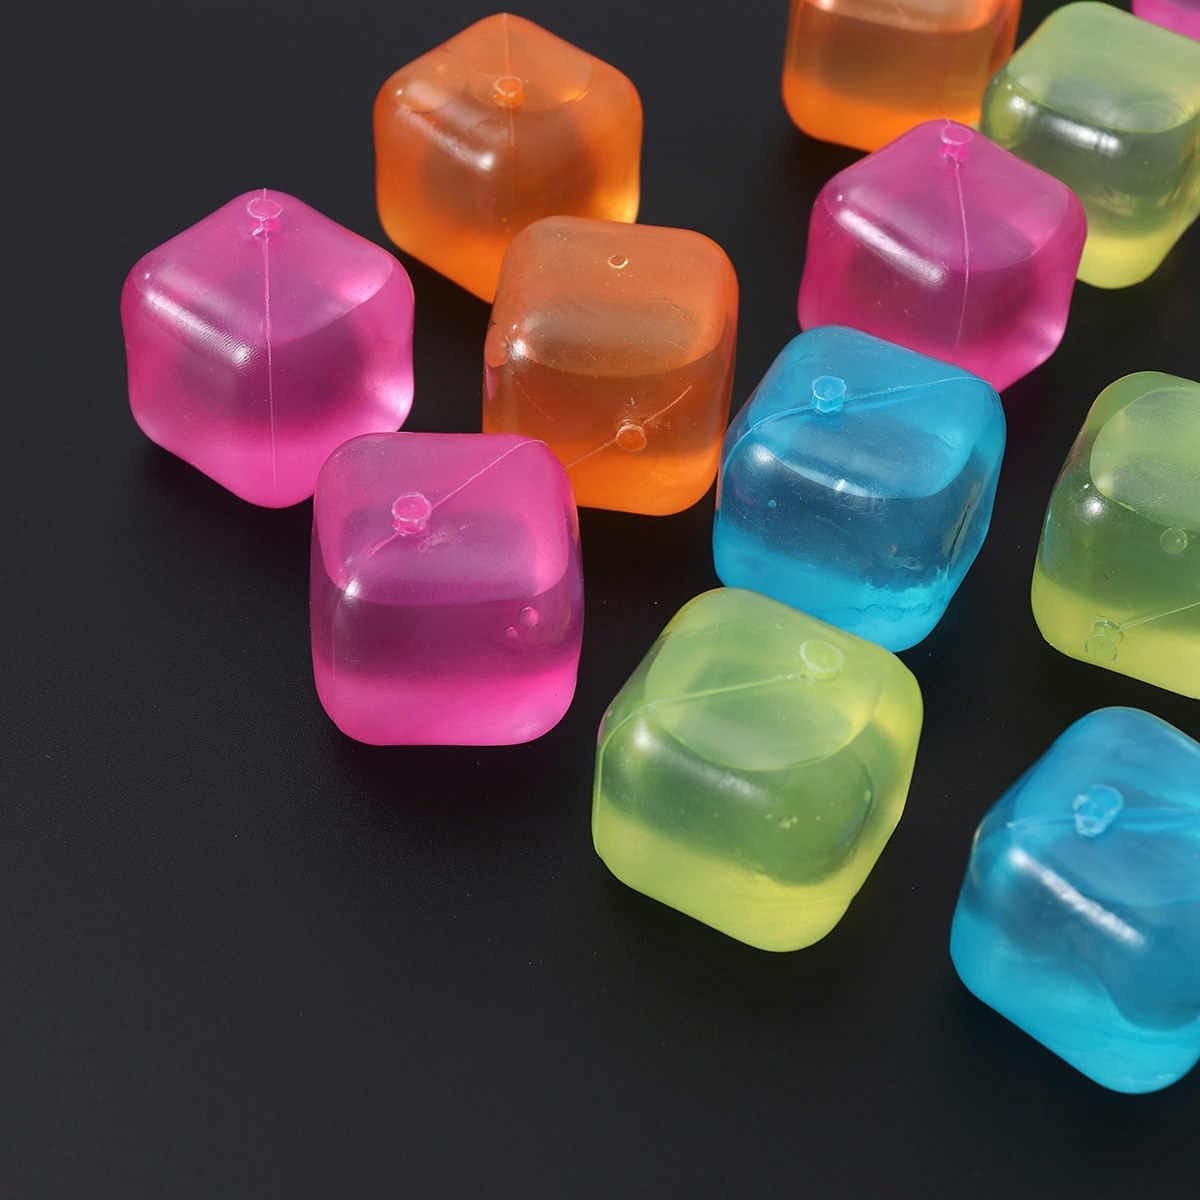 the reusable ice cubes on a plain dark background